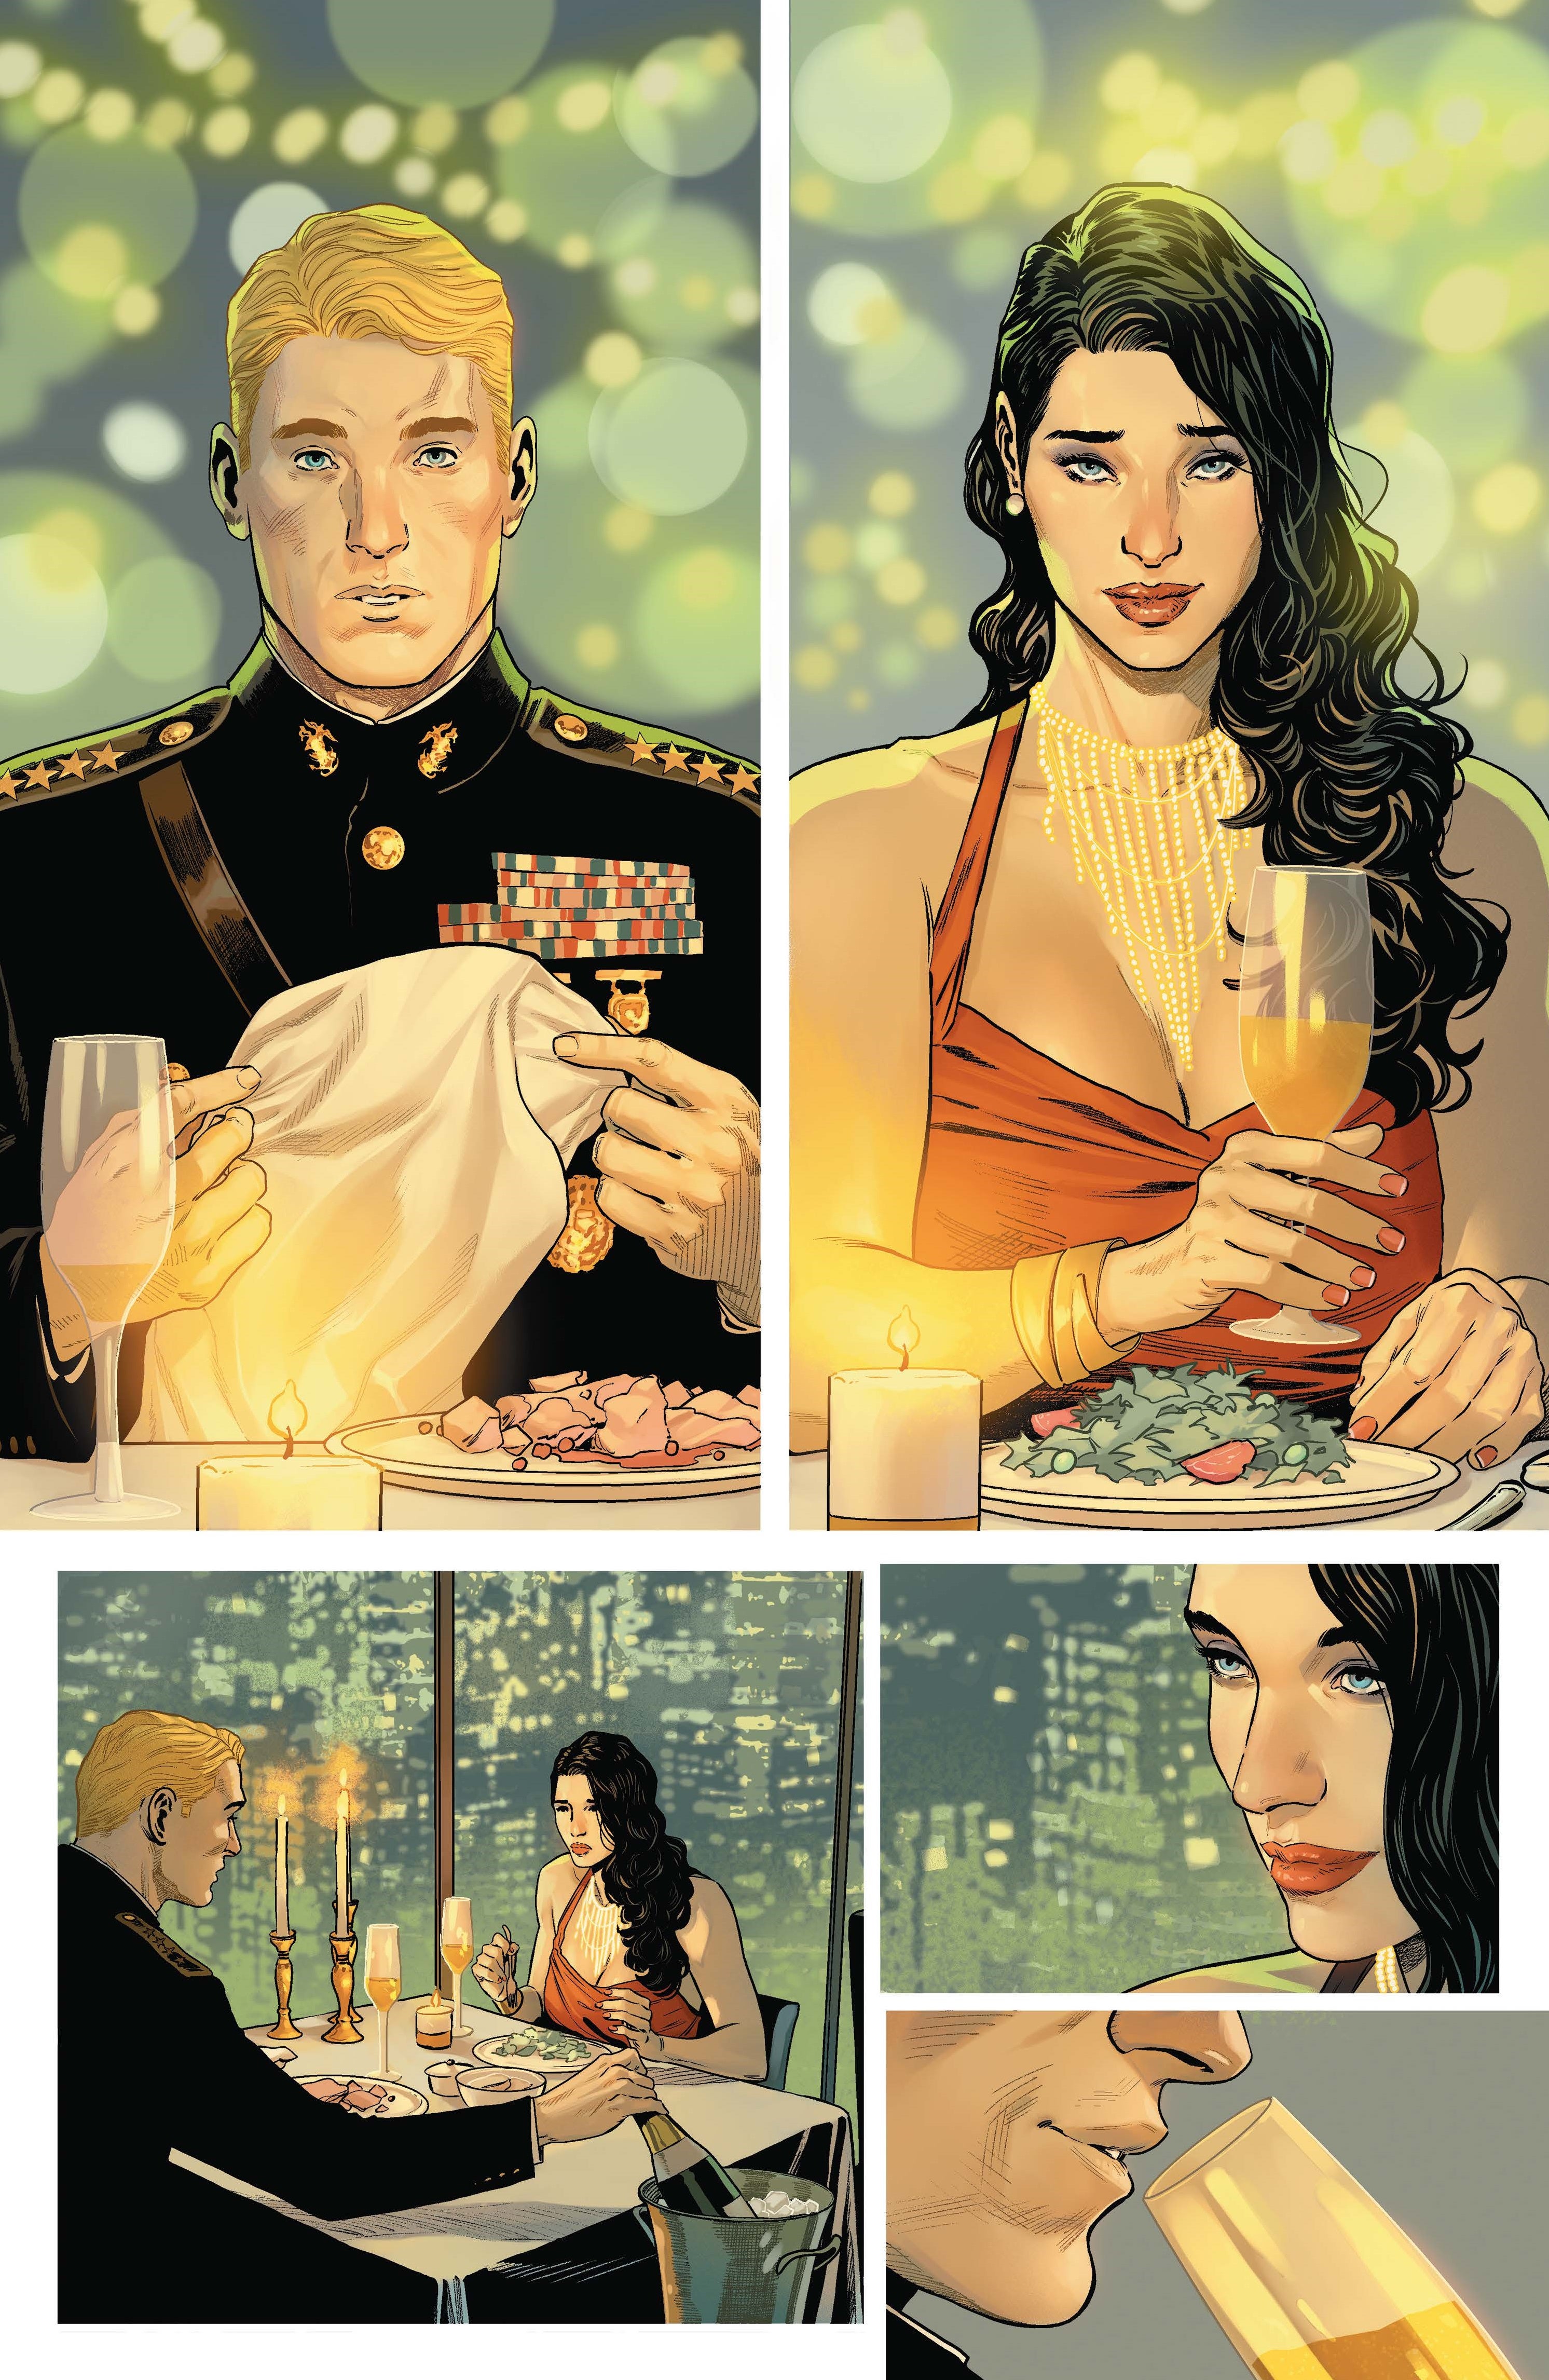 Wonder Woman has dinner with Steve Trevor